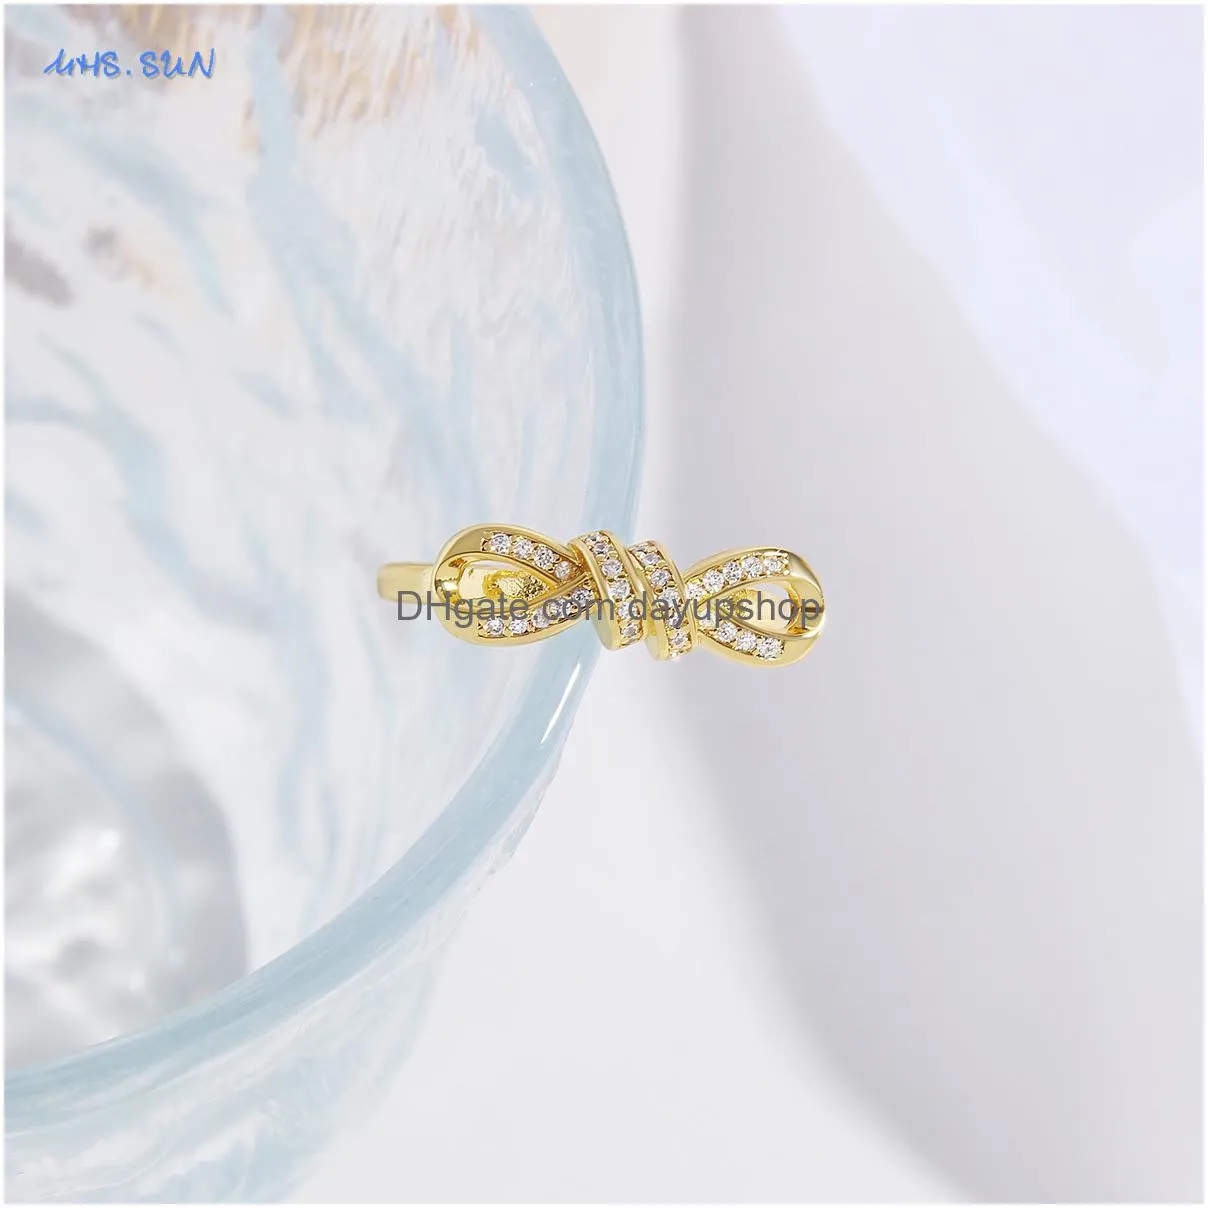 mhs.sun romantic cubic zircon twist butterfly knot finger rings for women girls 18k true gold plated wedding party jewelry